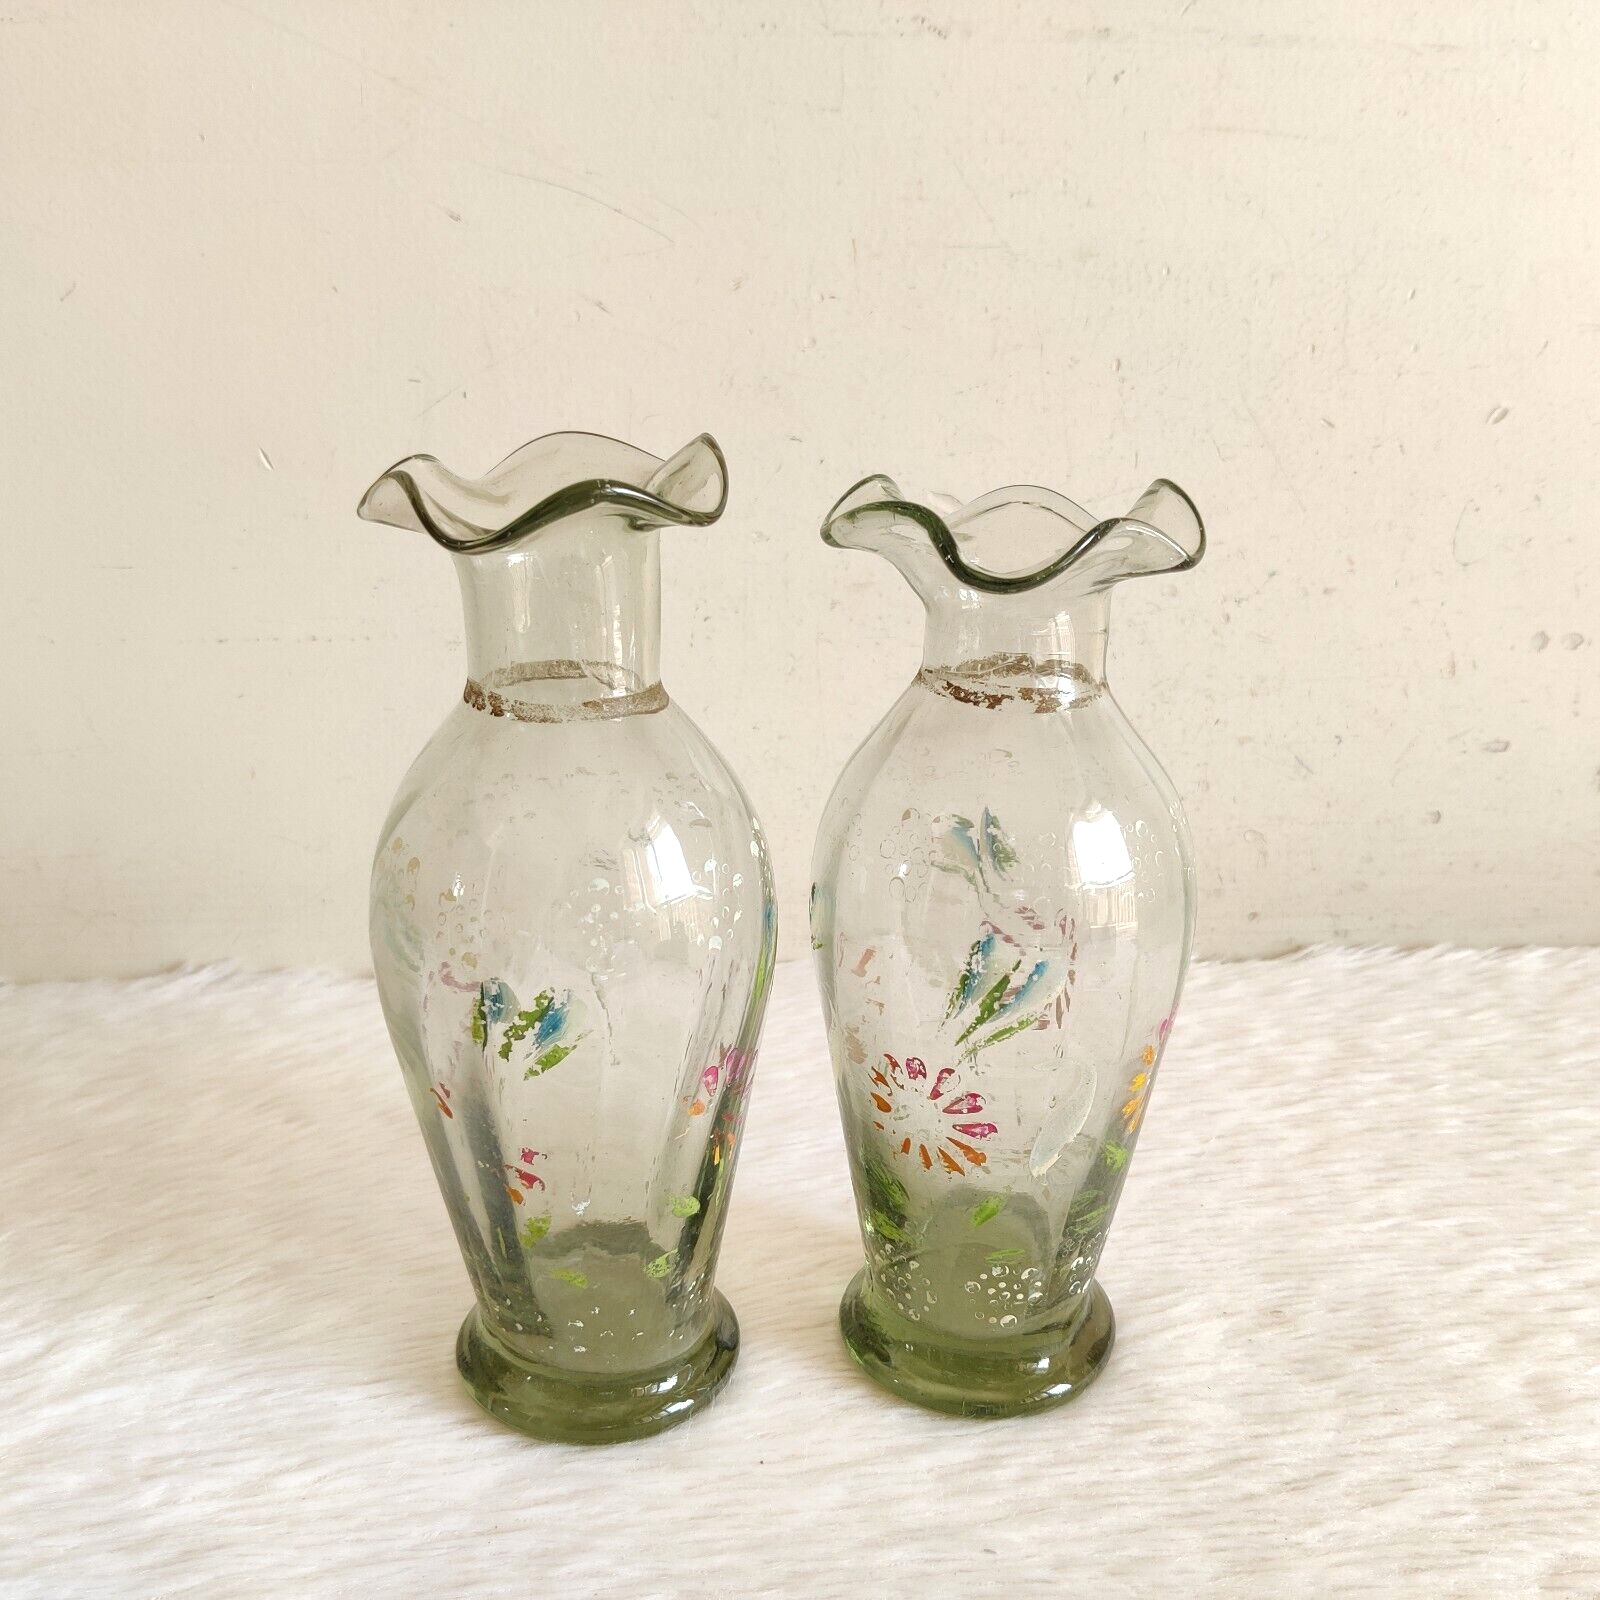 1930s Vintage Floral Artwork Glass Design Flower Vase Decorative Pair Rare GV197